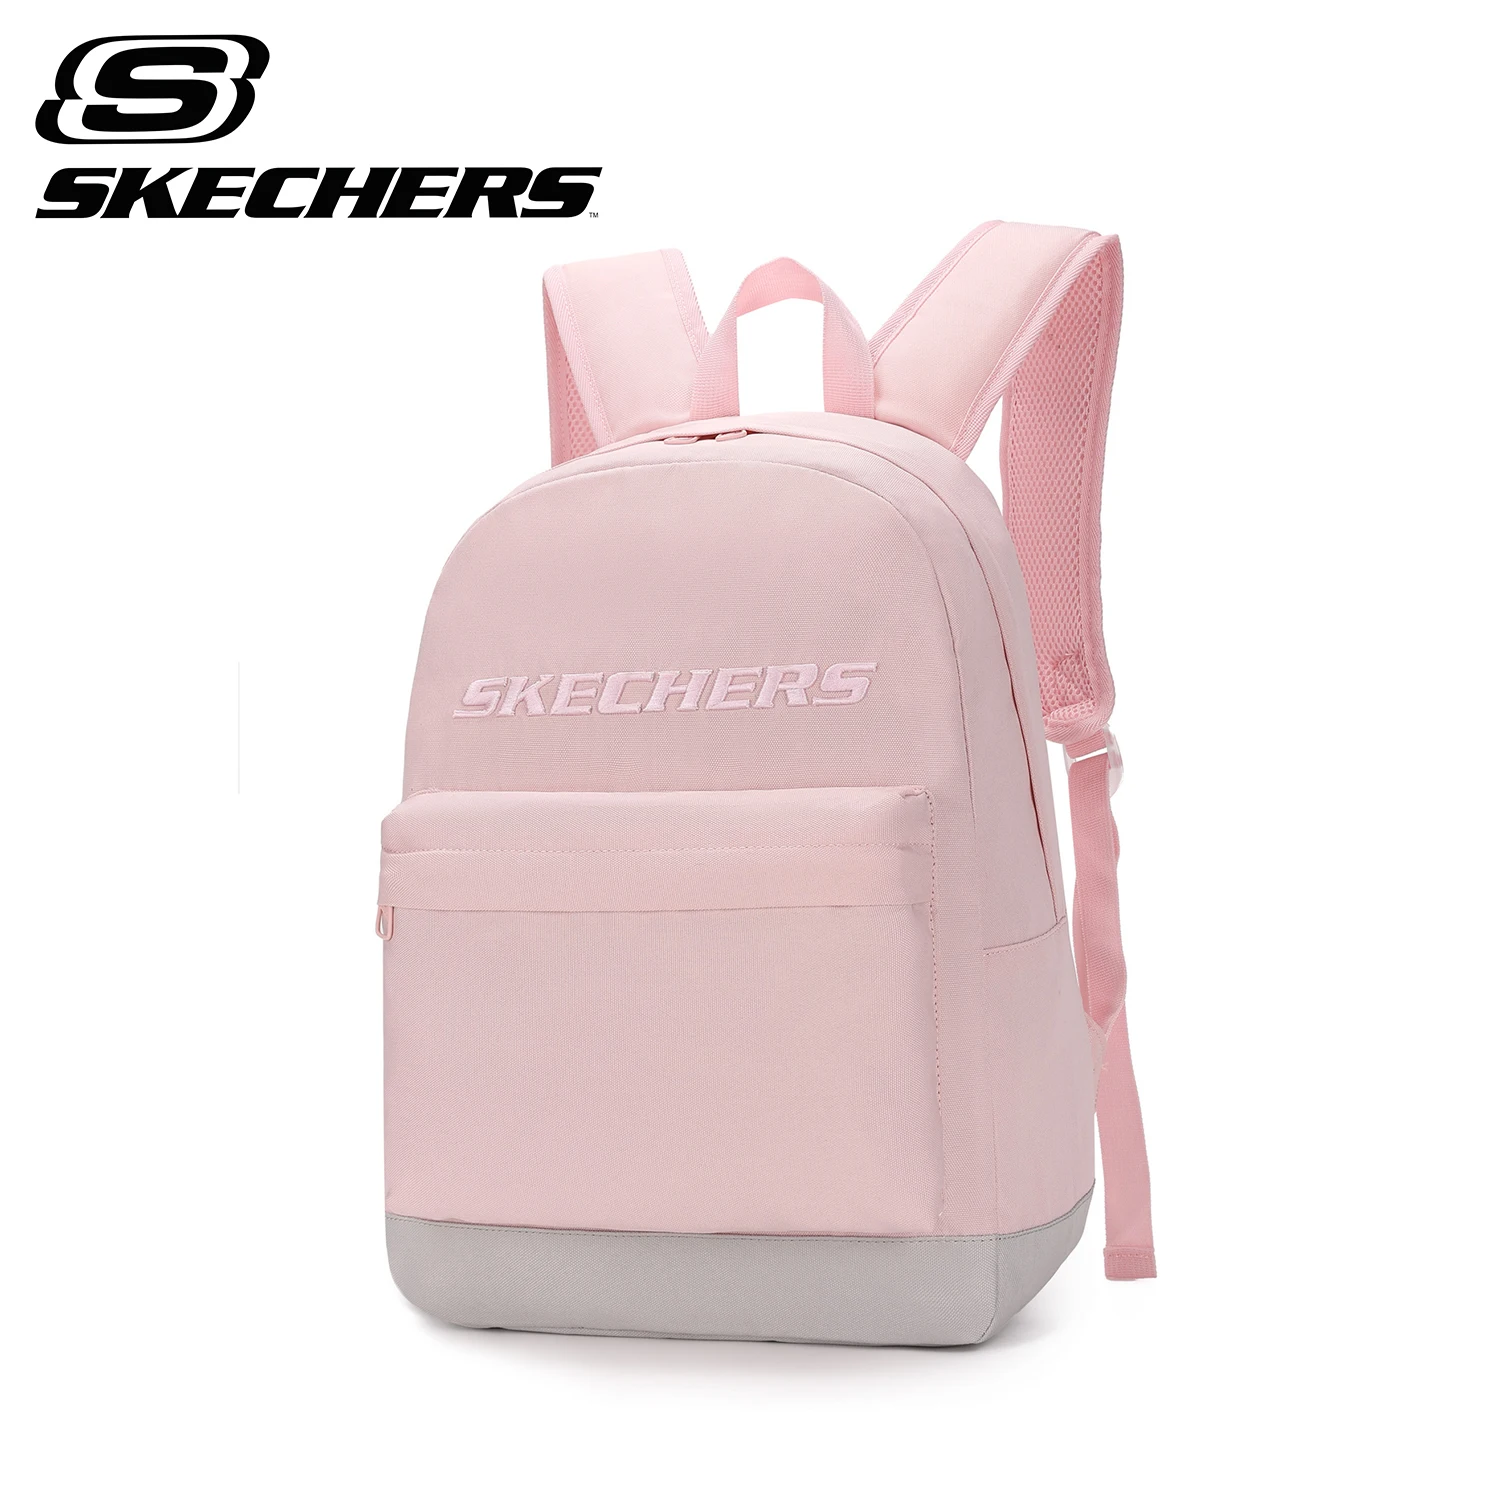 Skechers Performance Shoe Case Sports Travel Accessory Pouch Bag (Black) |  eBay